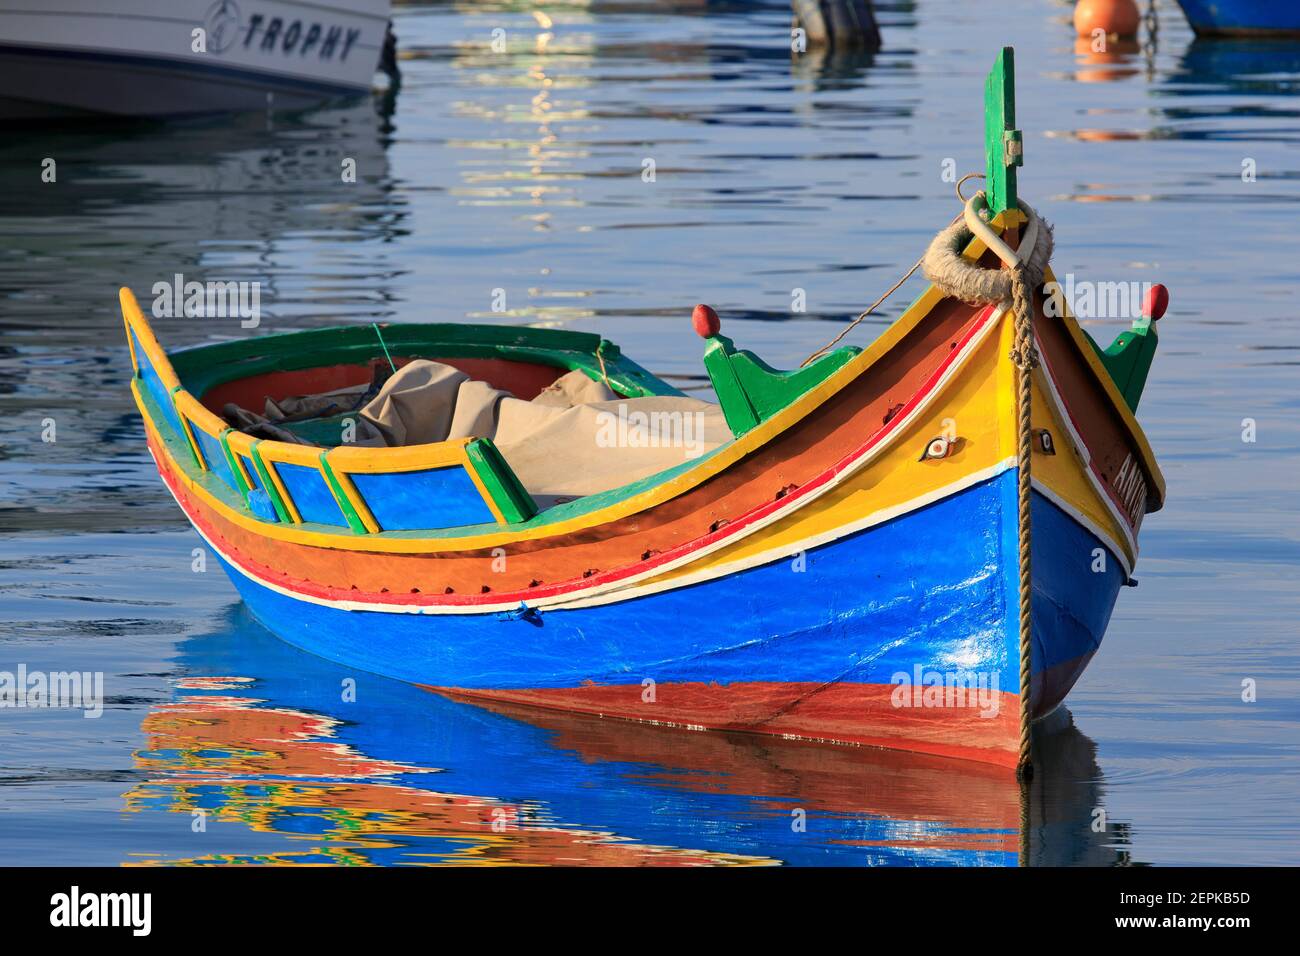 A luzzu (Maltese traditional fishing boat) in moored in the marina of Marsaxlokk, Malta Stock Photo